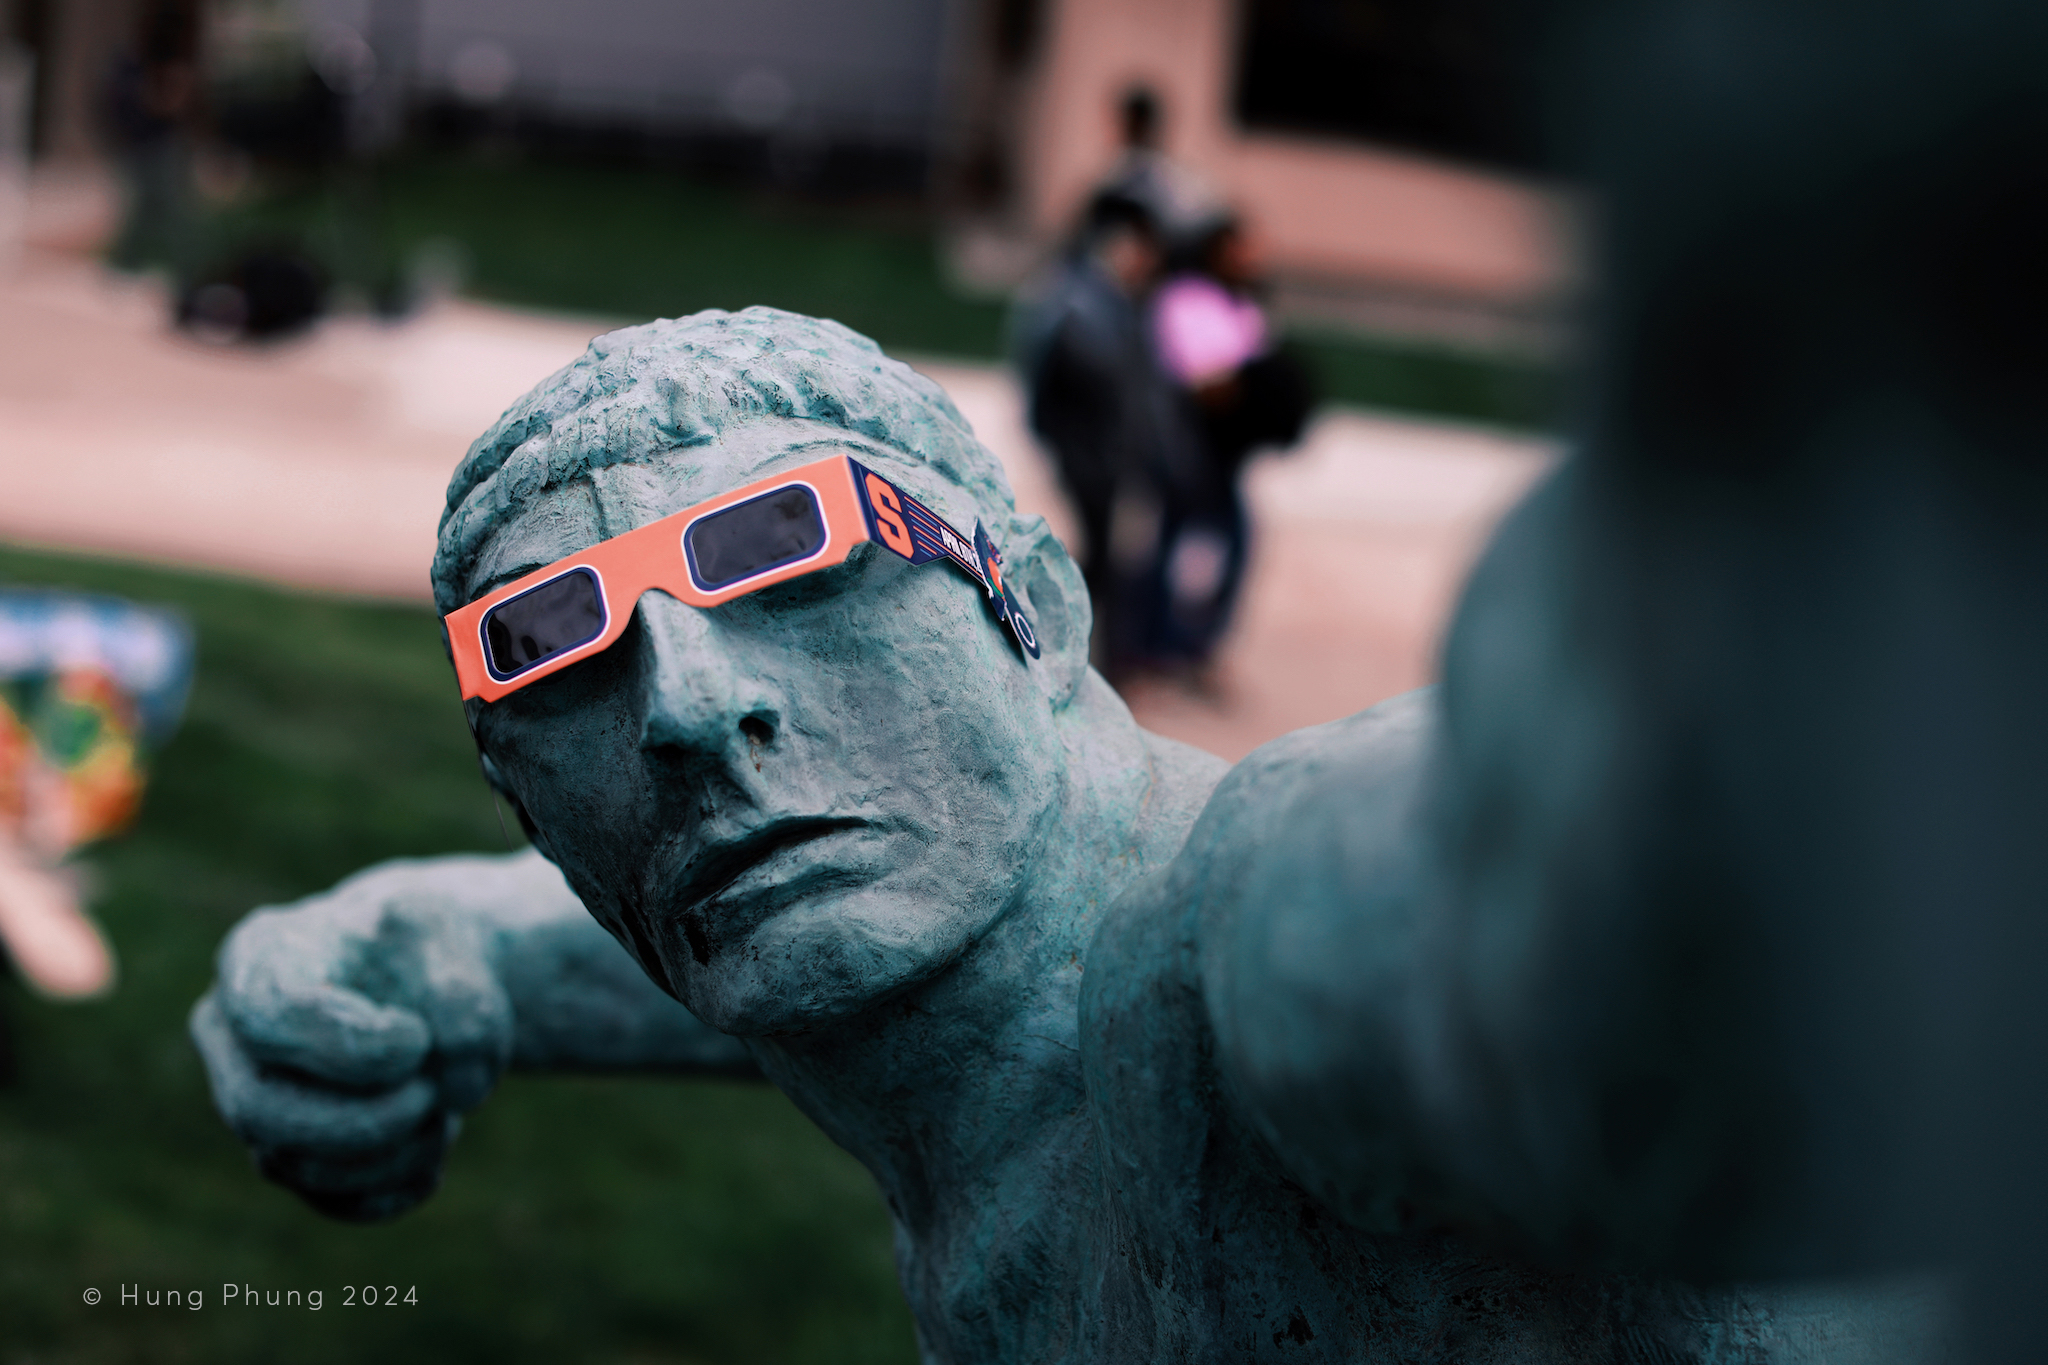 Statue wearing solar eclipse glasses